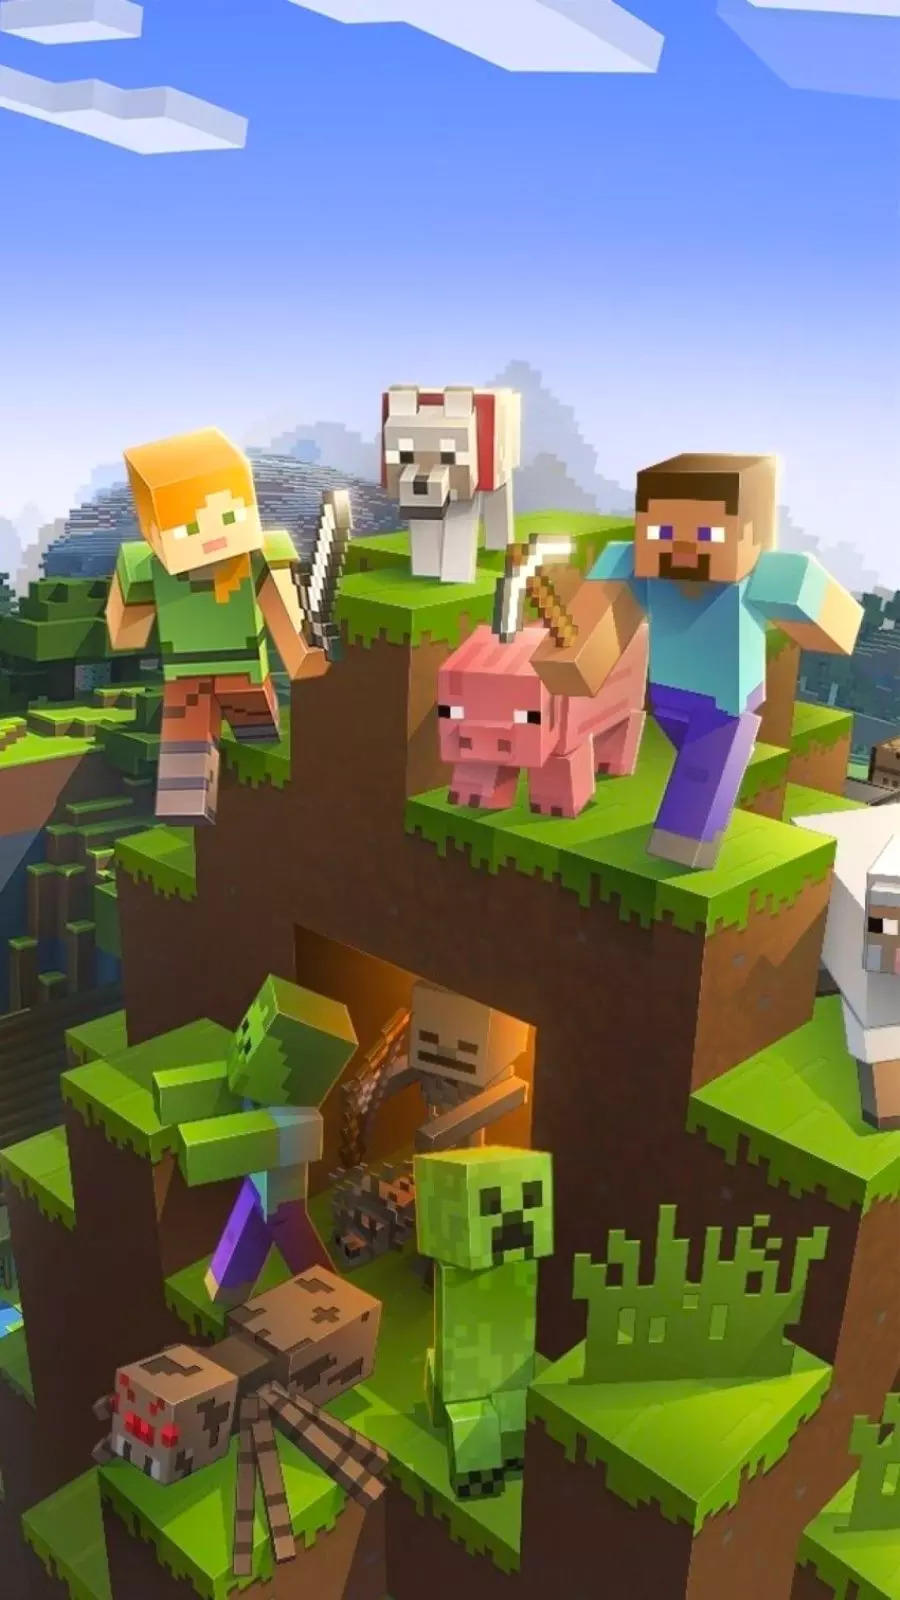 Top 5 New Features Coming In Minecraft 1.20 Update | EconomicTimes